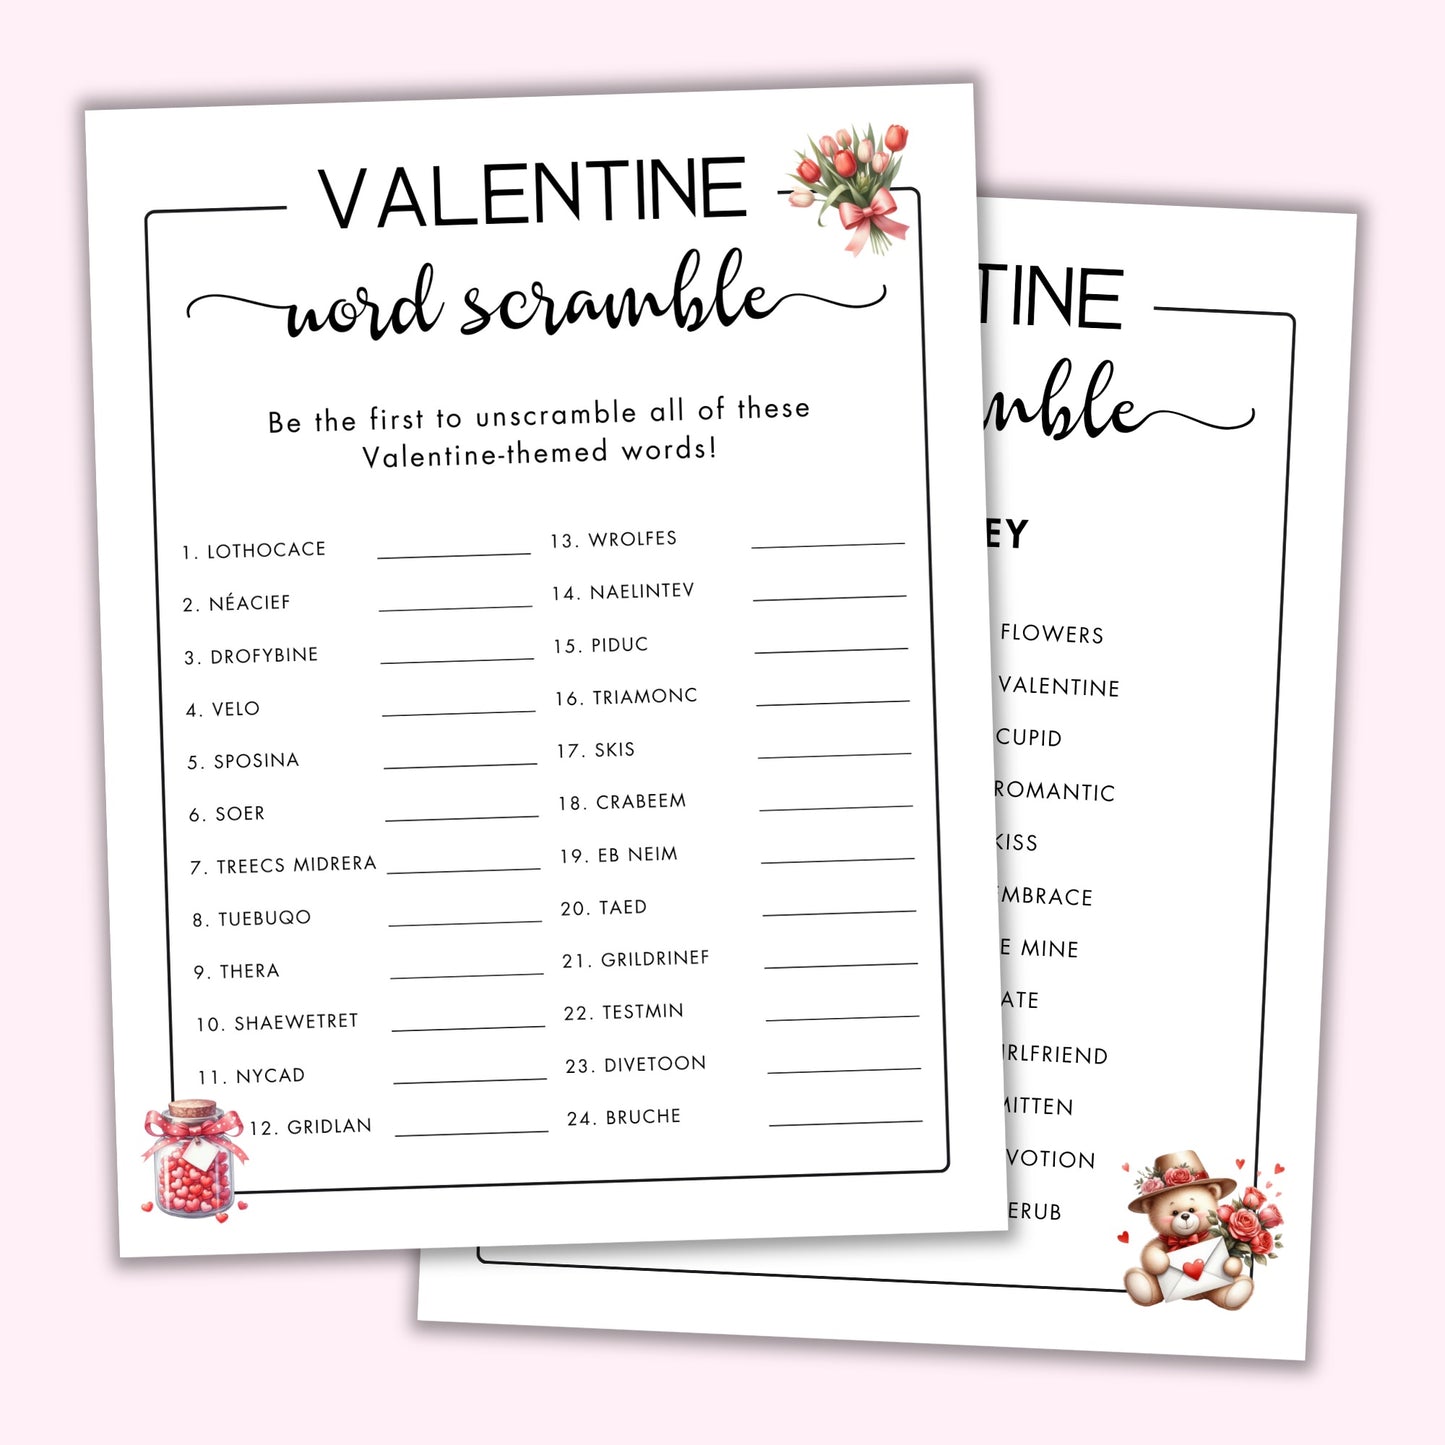 Valentine's Day Word Scramble